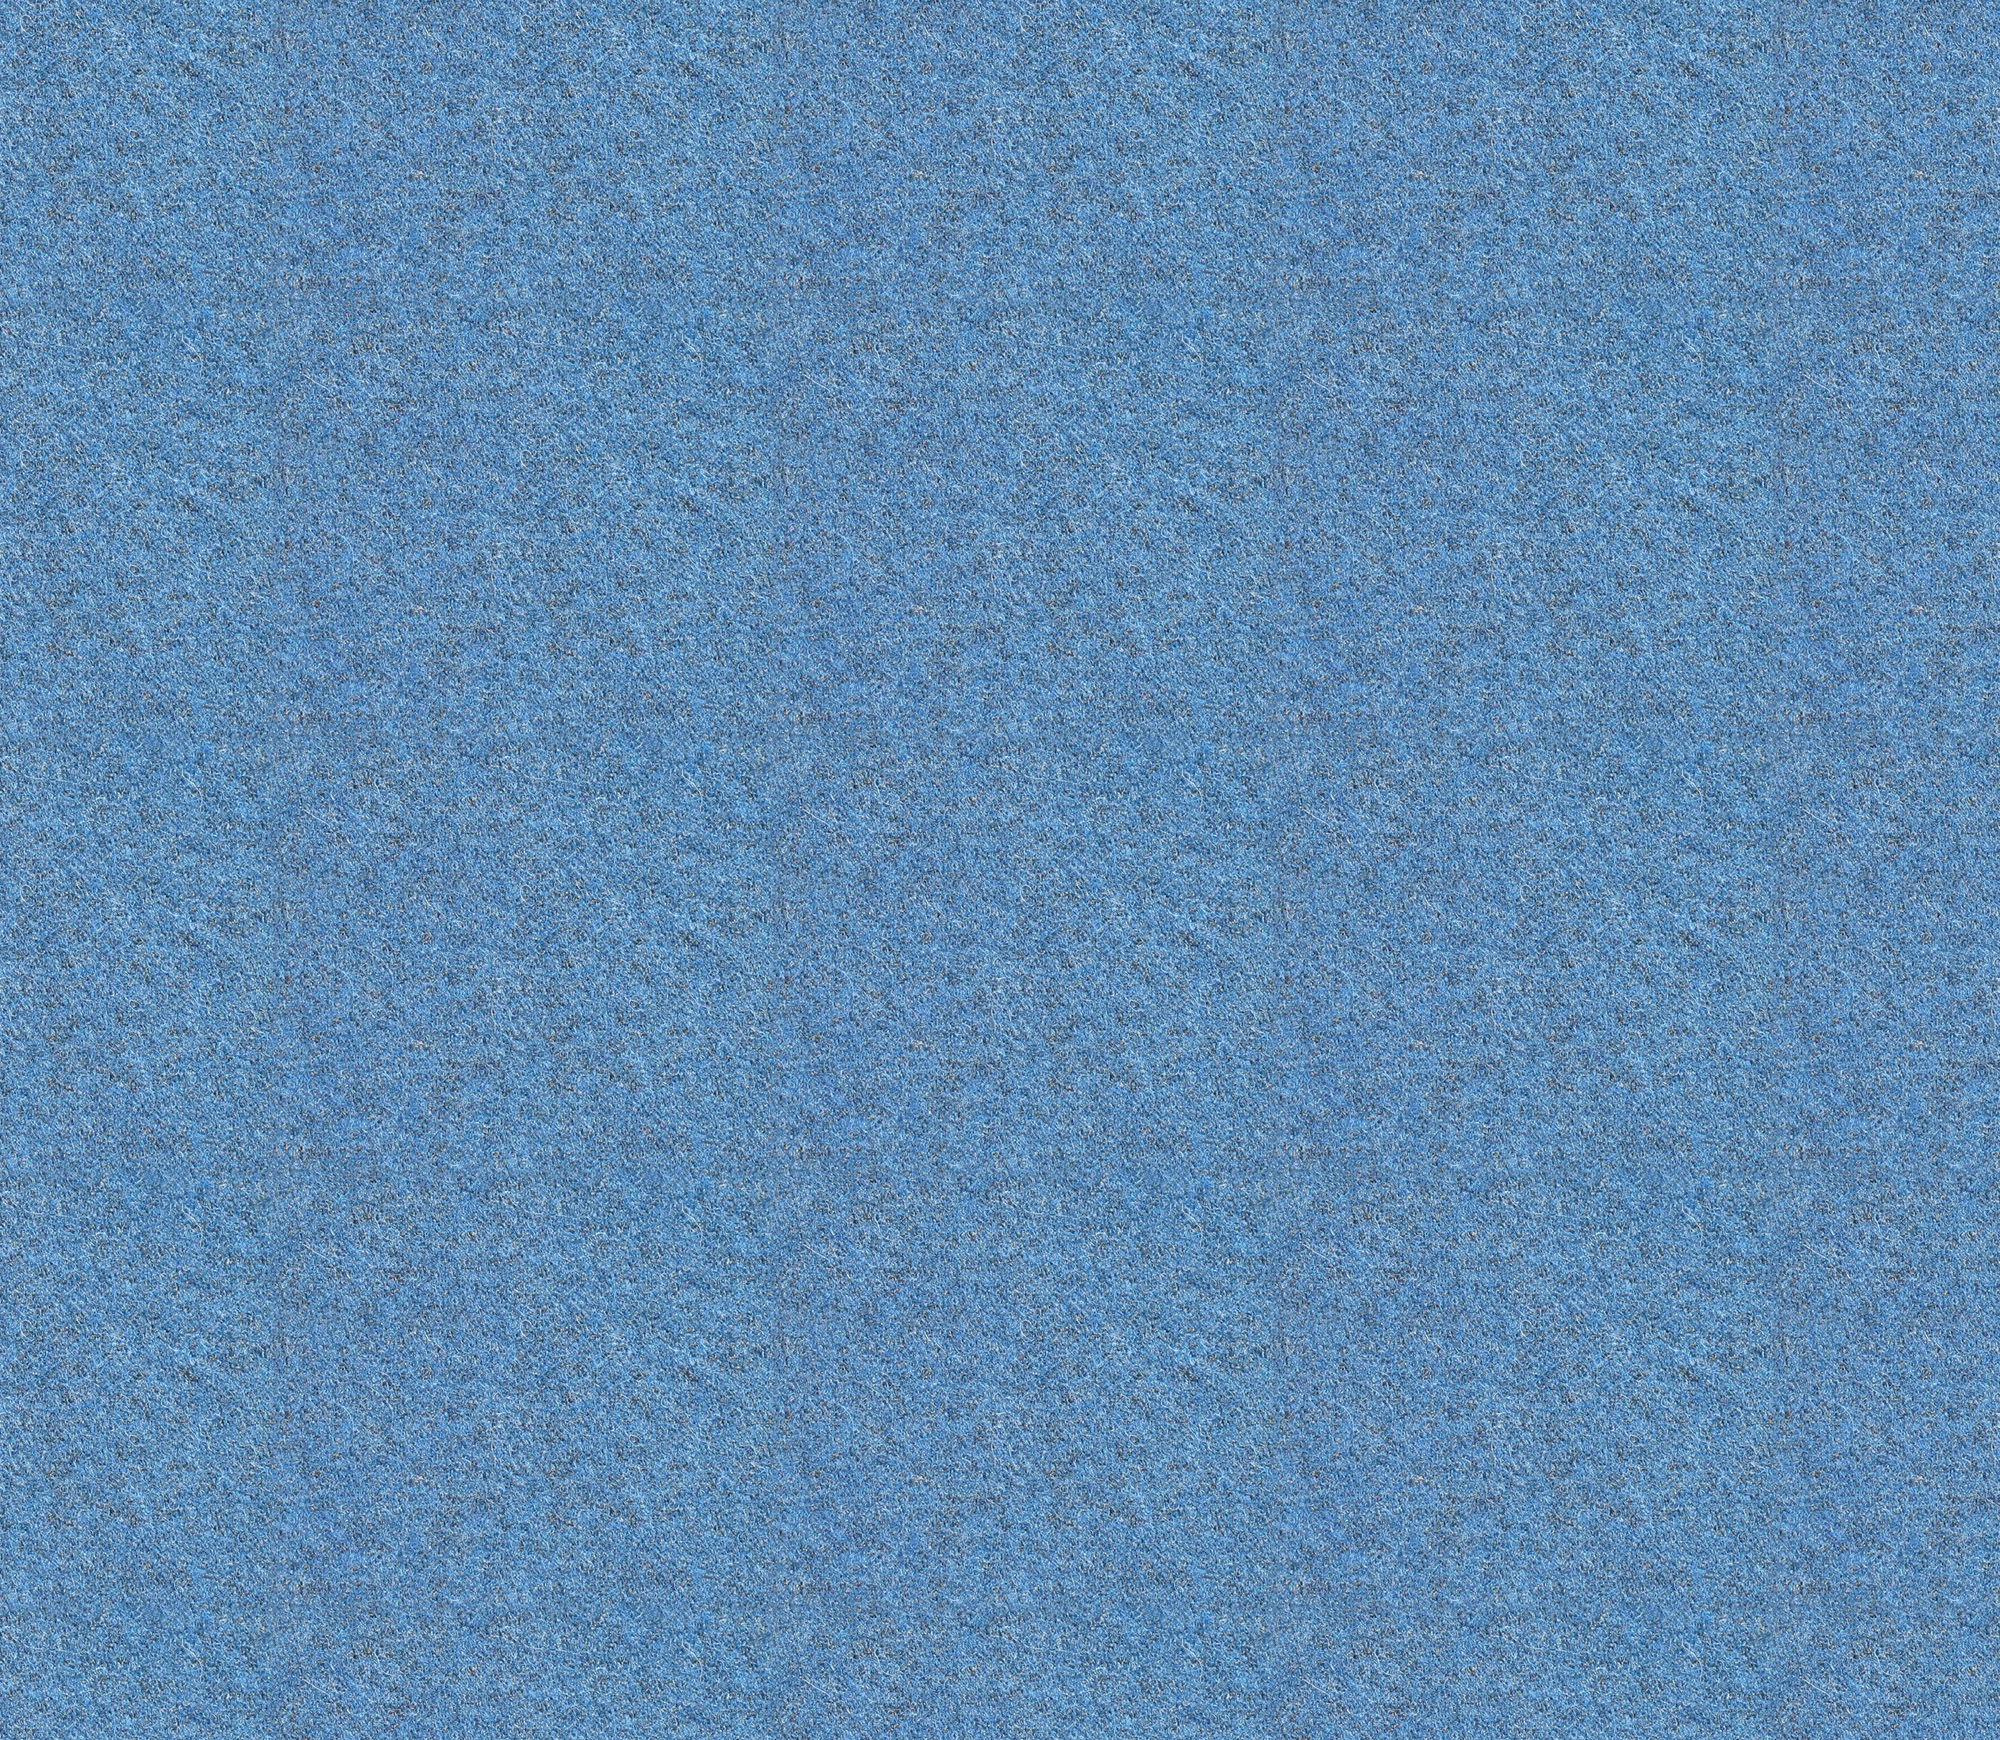 blue_mohair_fabric_texture.jpg